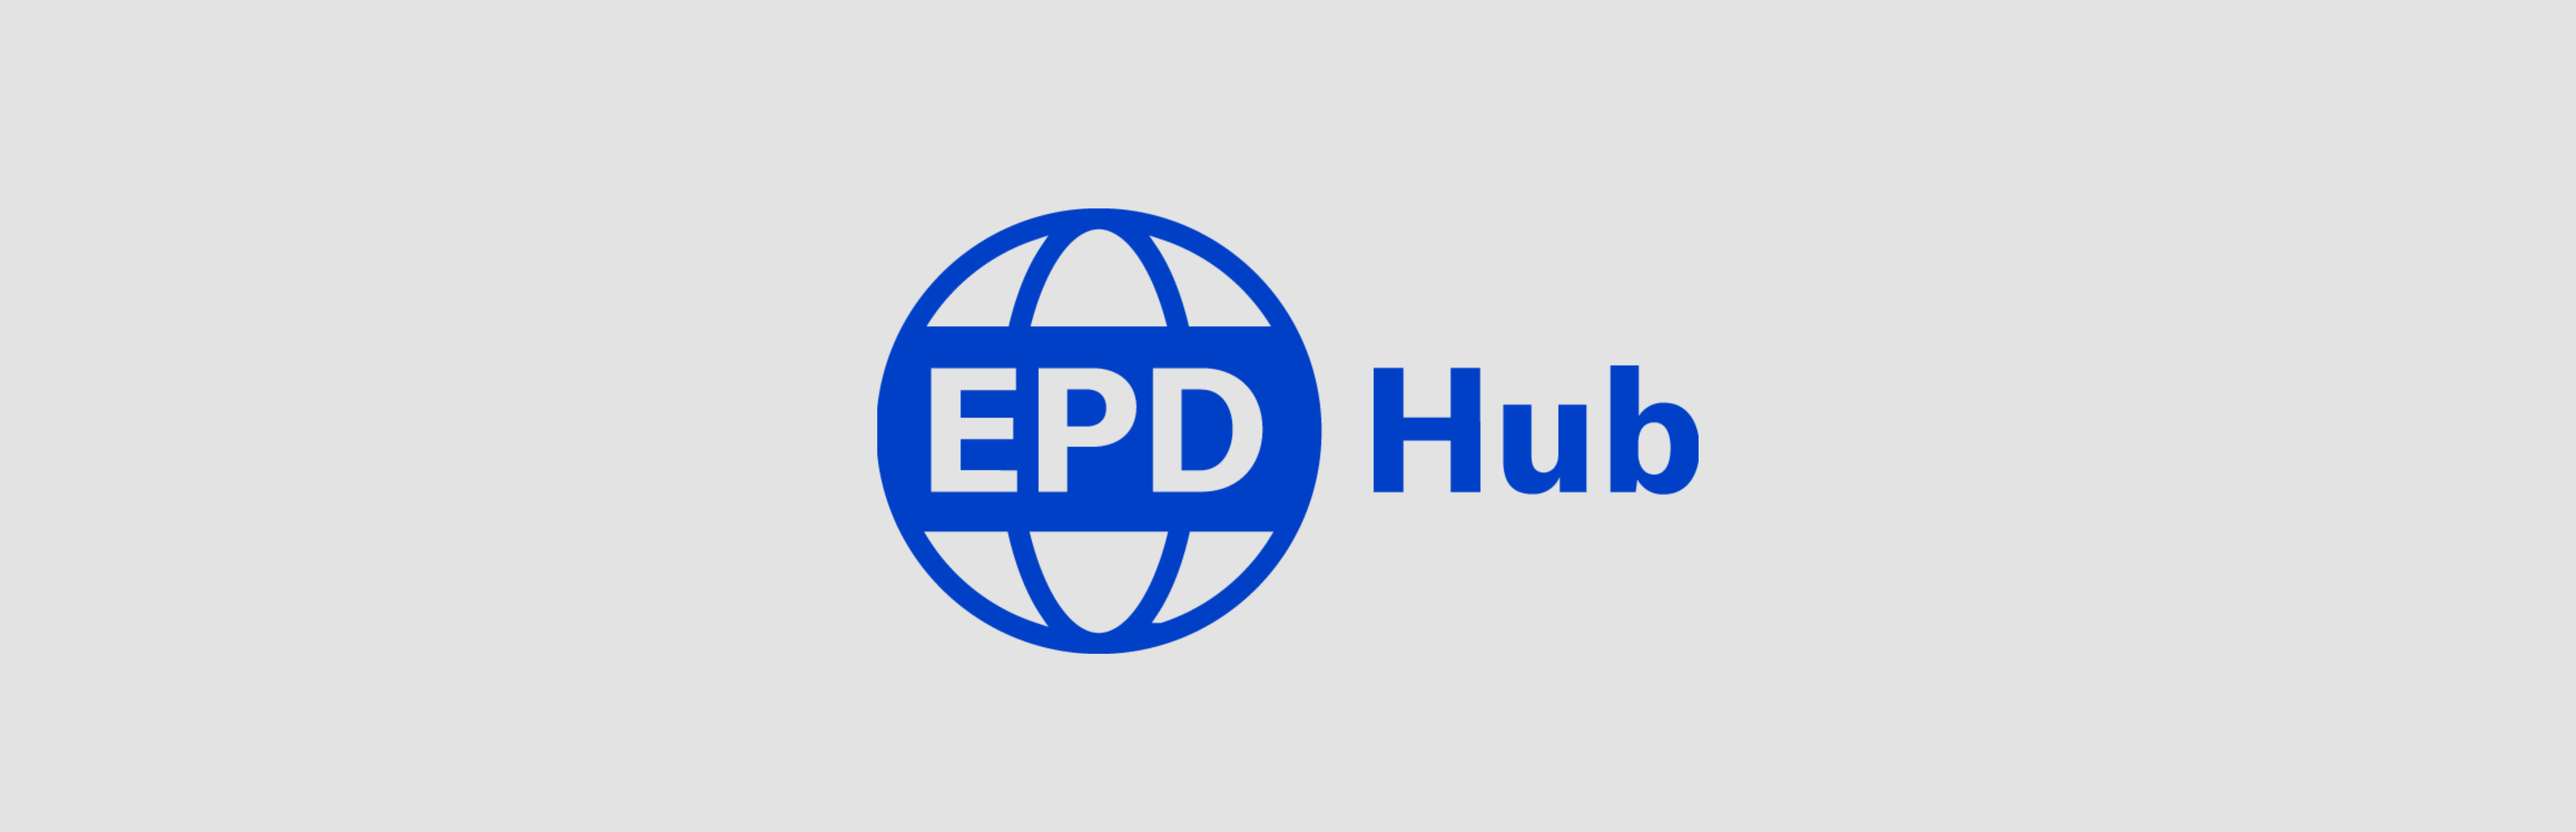 EPD Hub banner